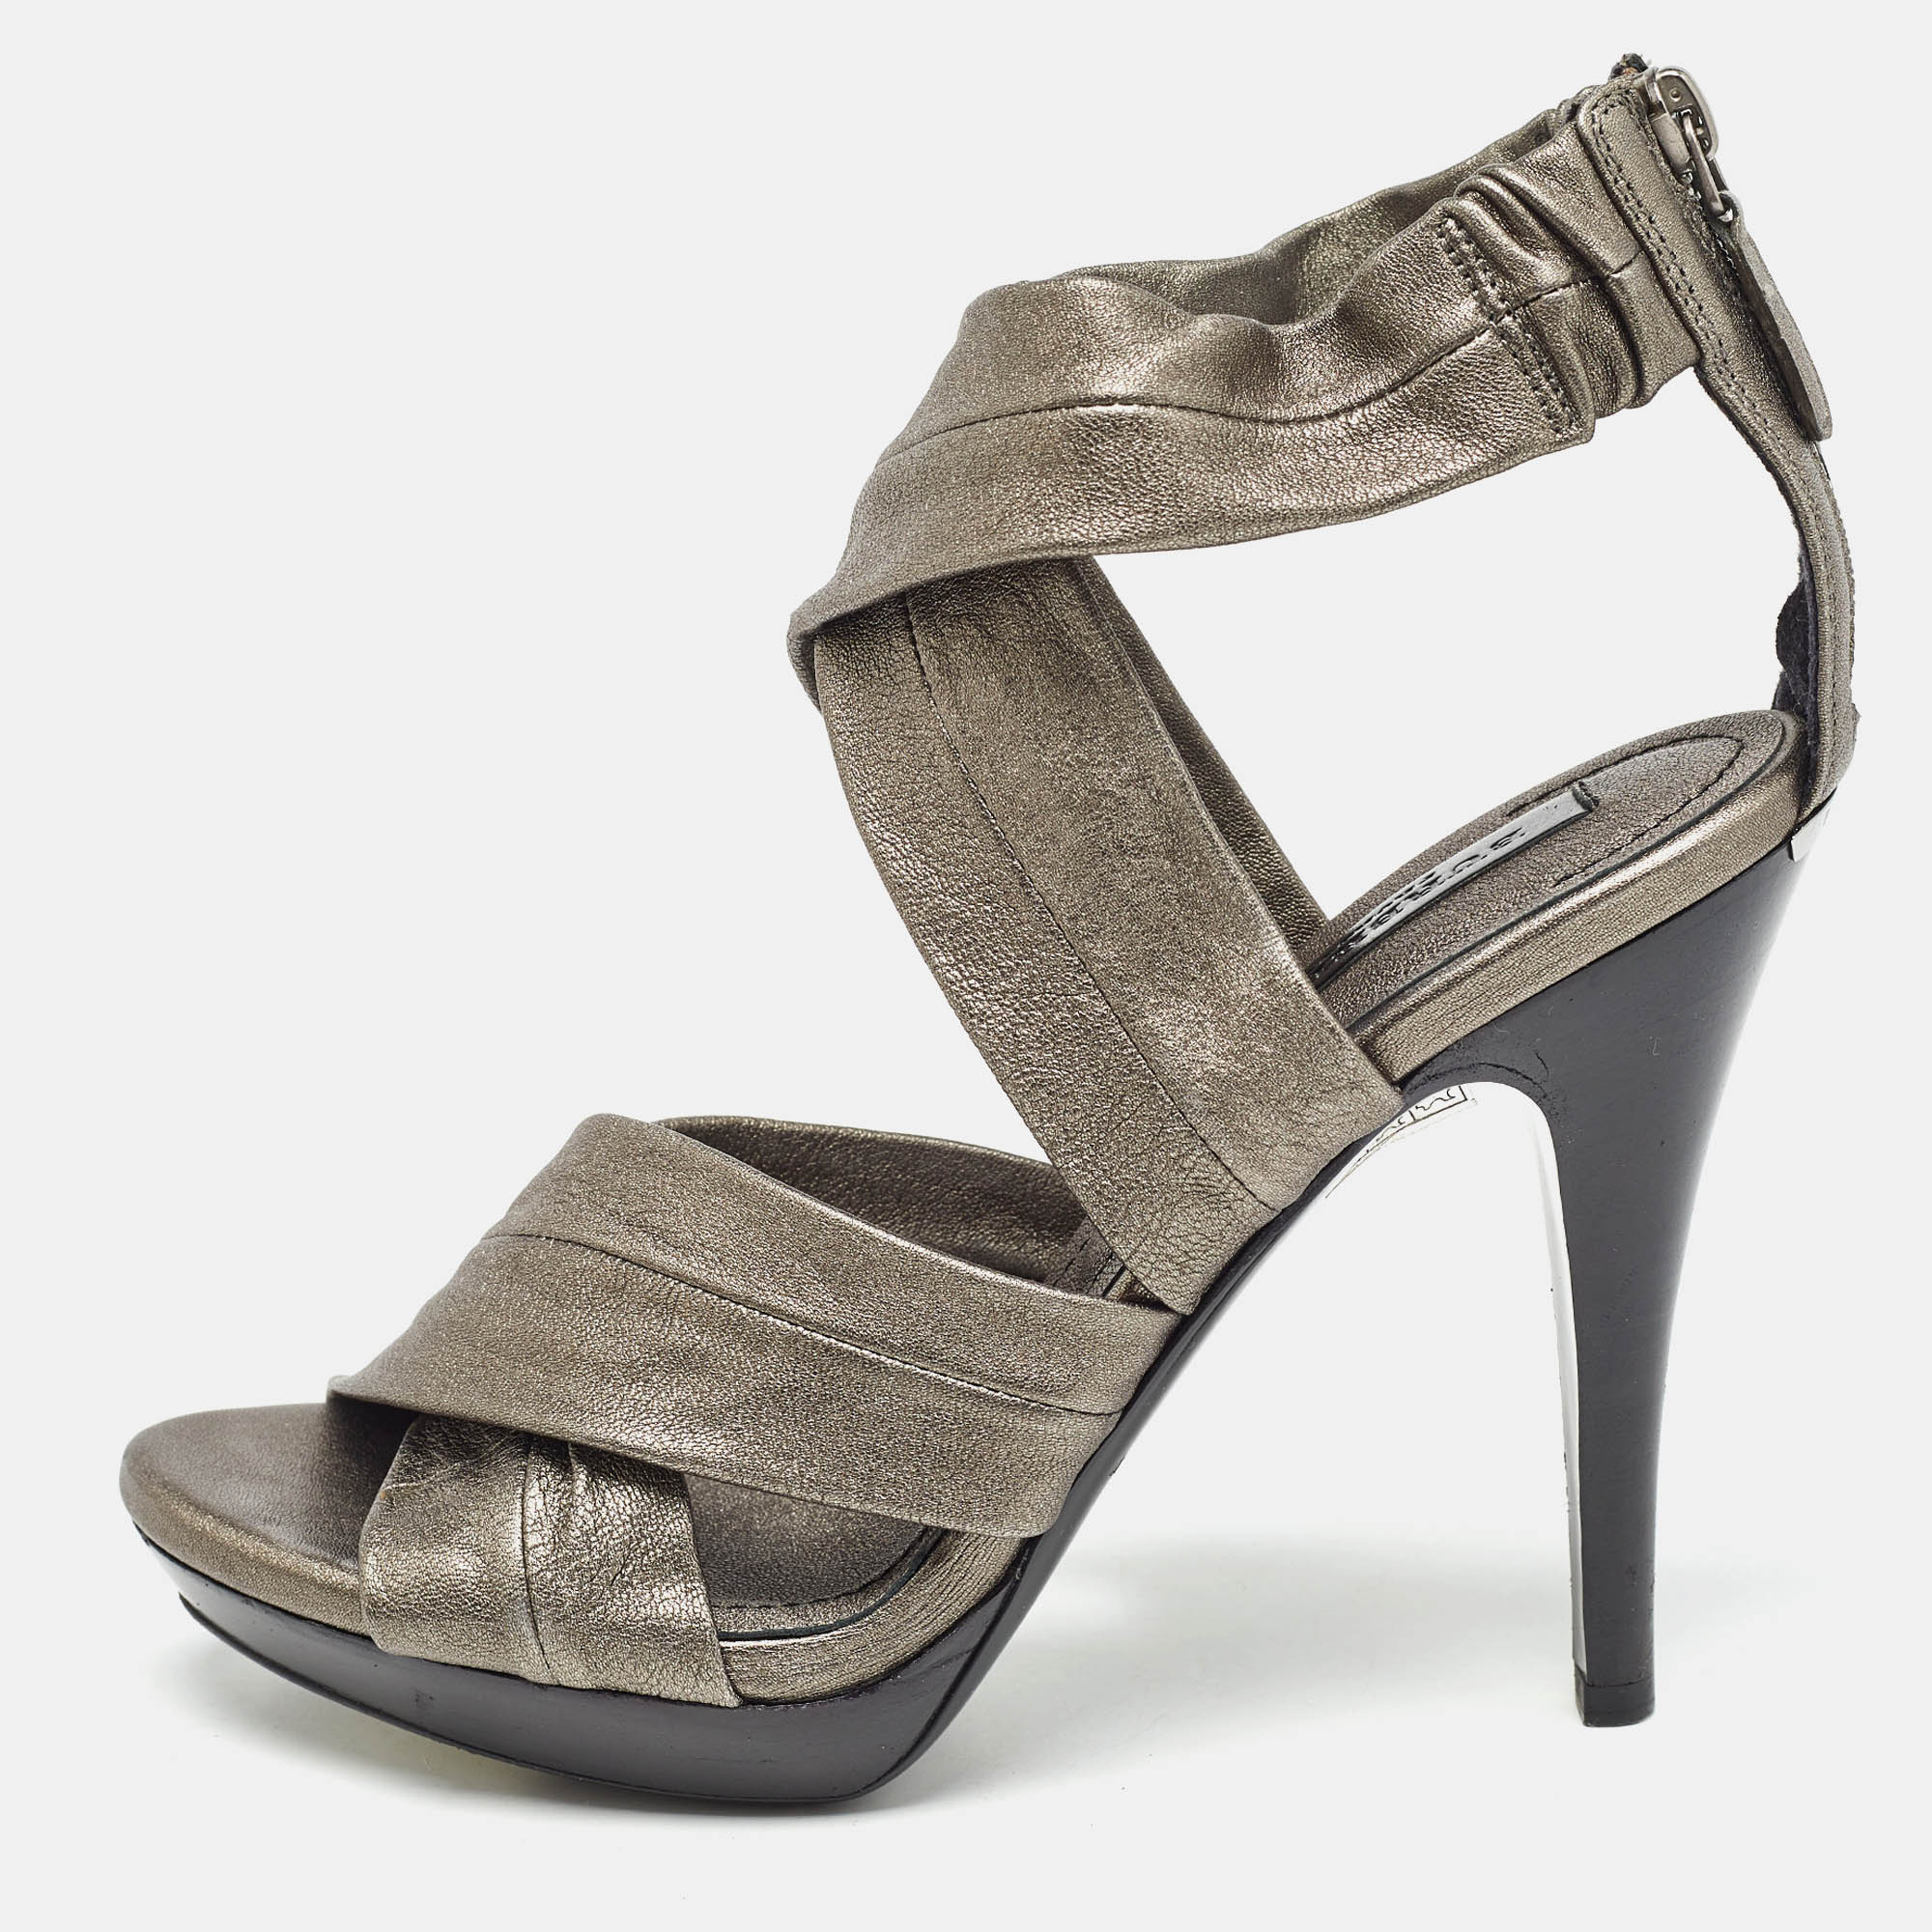 Burberry grey leather platform ankle wrap sandals size 39